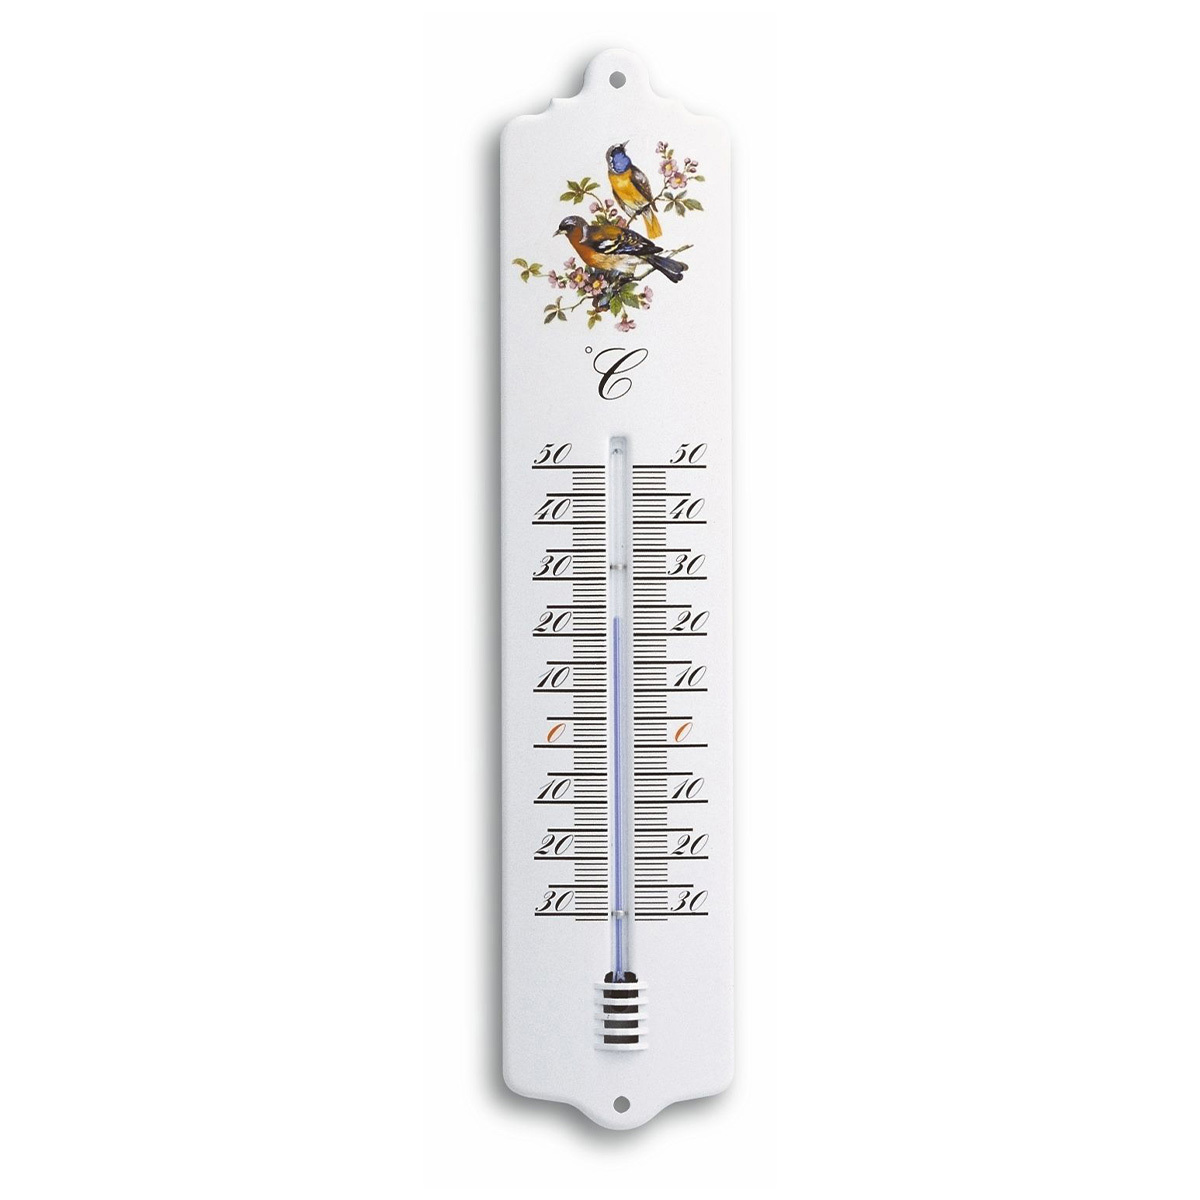 12-2011-20-analoges-innen-aussen-thermometer-metall-1200x1200px.jpg